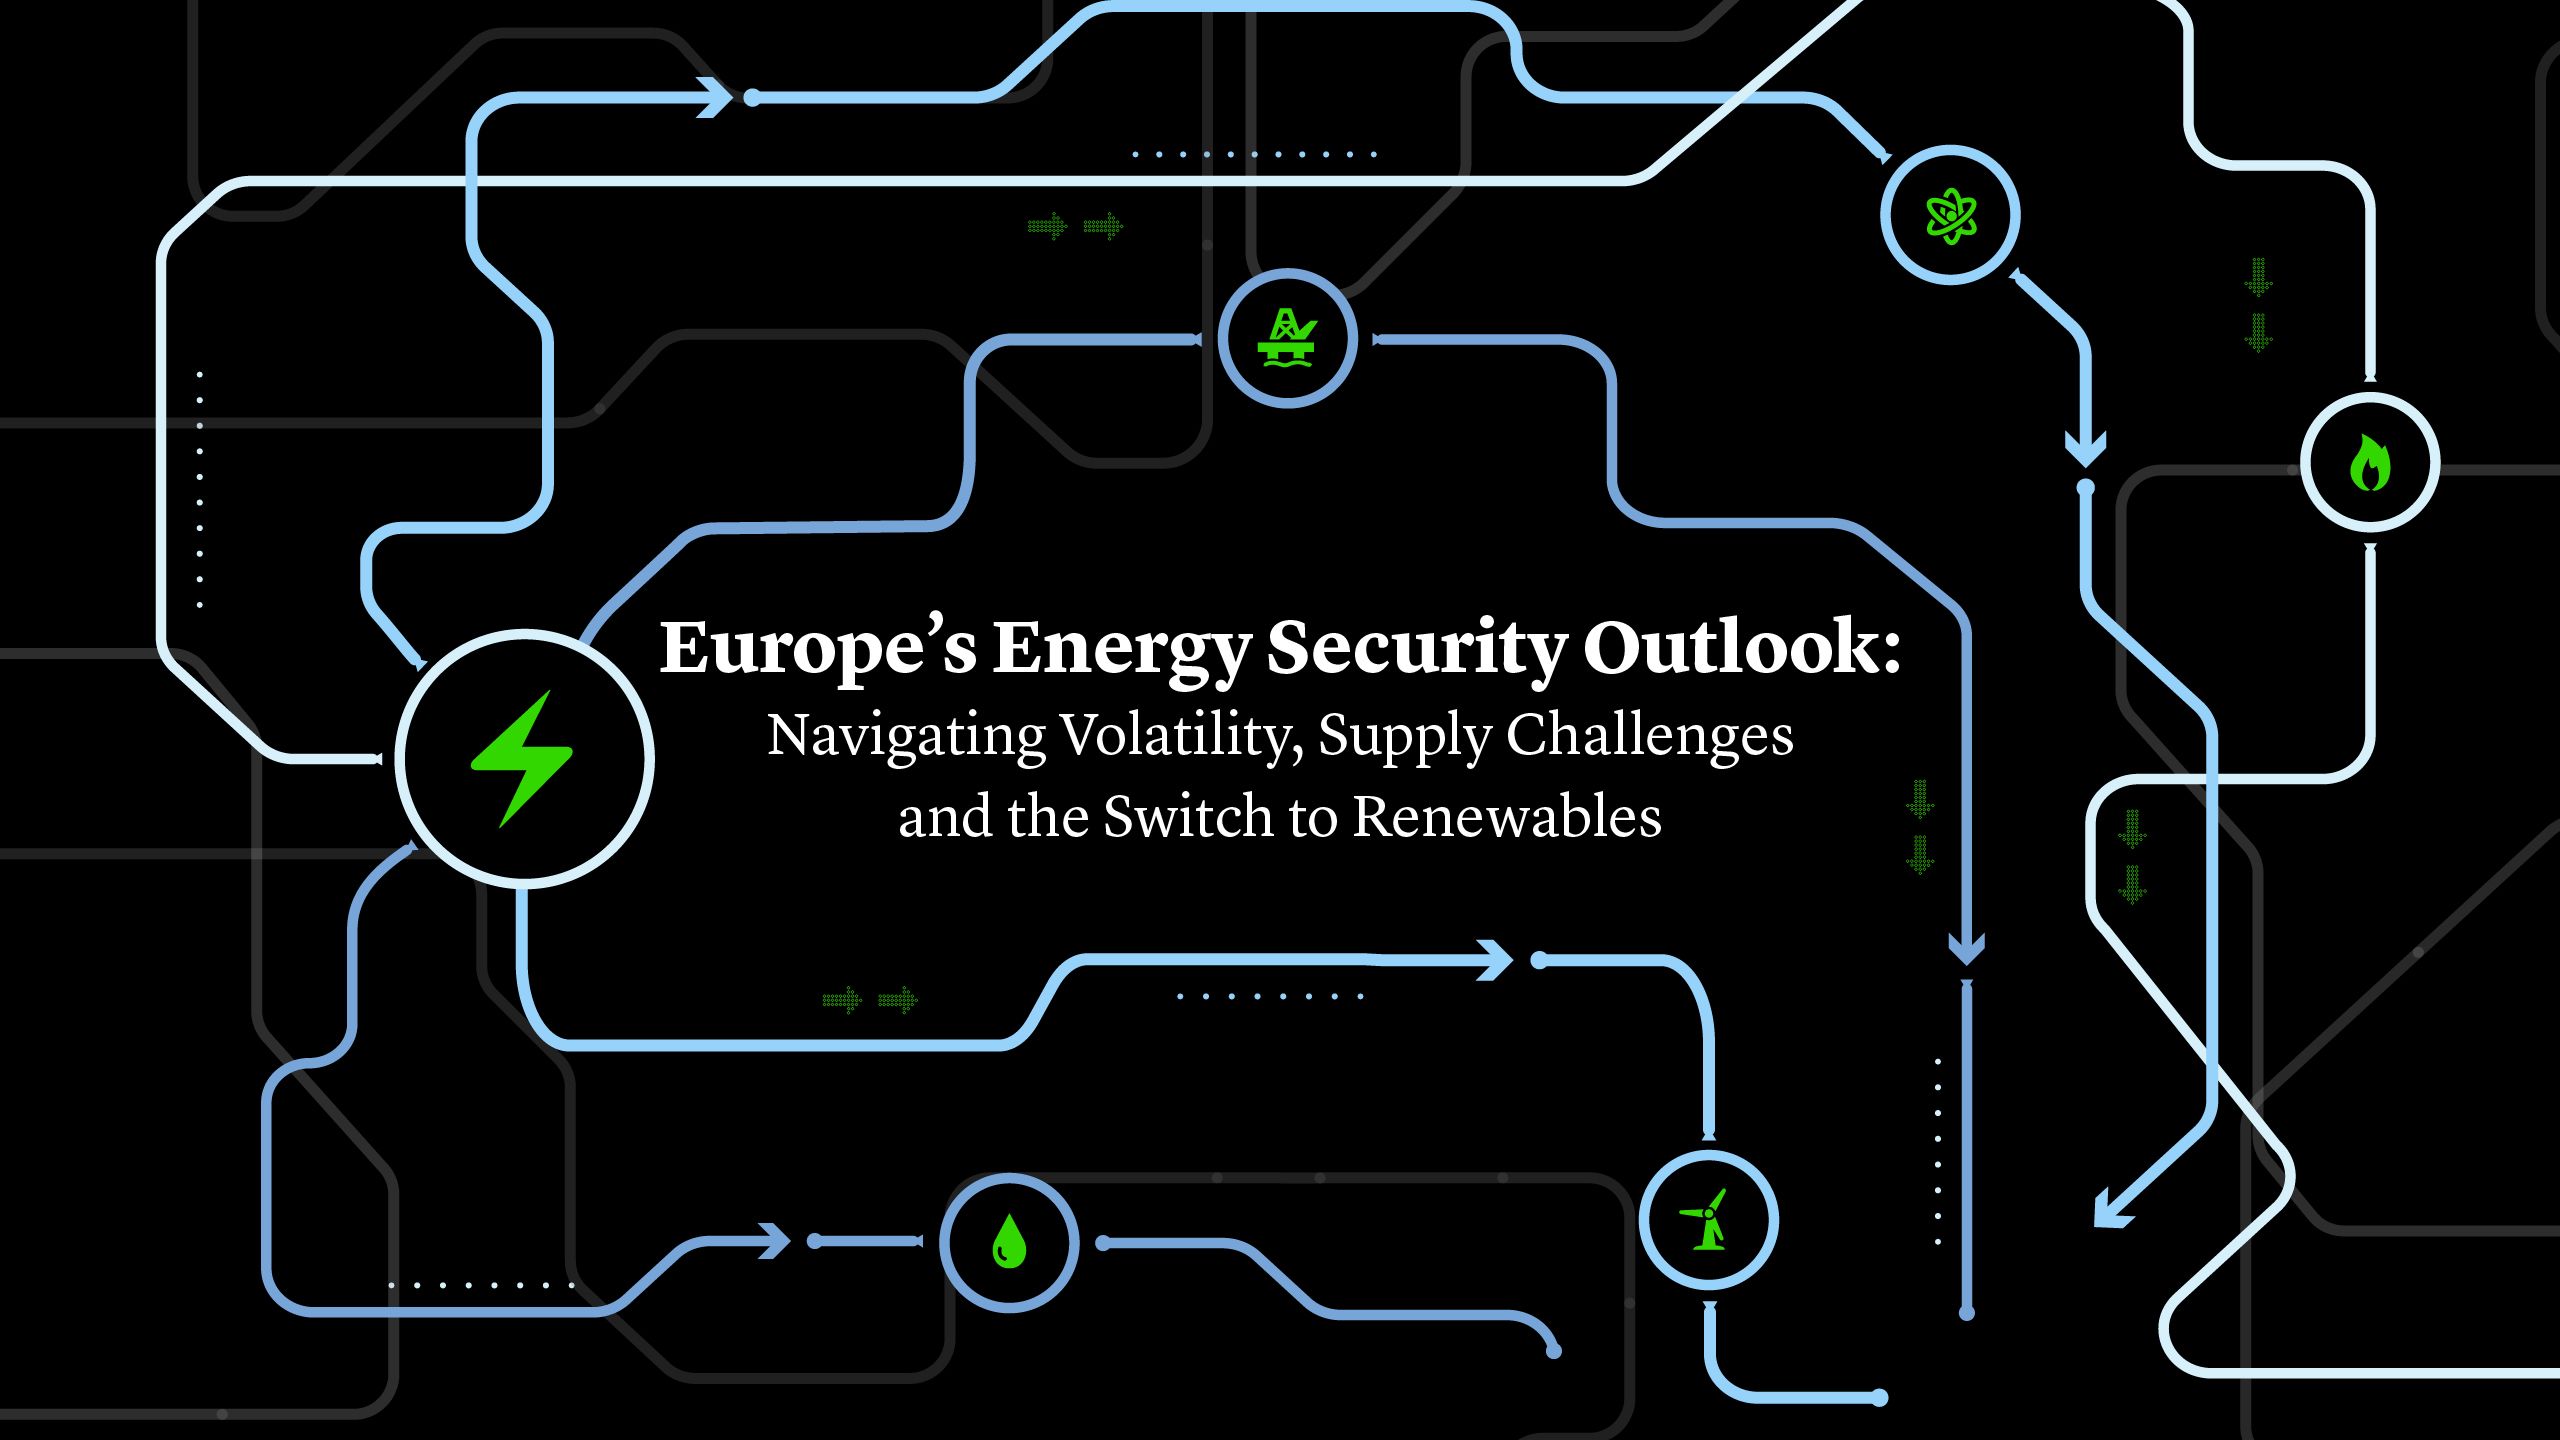 Europe's Energy Security Outlook: Navigating Volatility, Supply Challenges and the Switch to Renewables